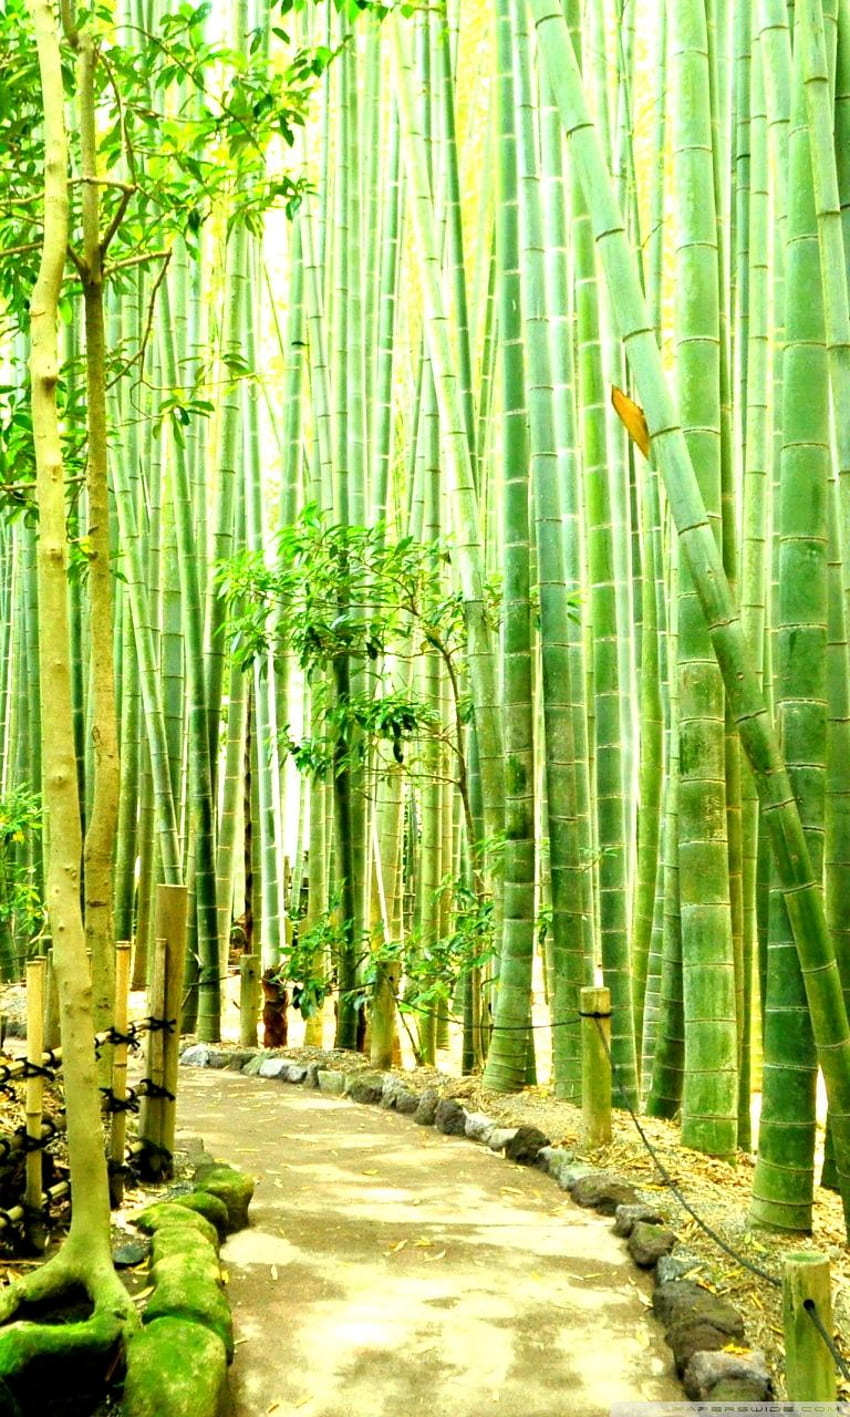 Jess Art Decoration 3D Bamboo Forest Road Wall Mural Wallpaper 255 |  Catch.com.au